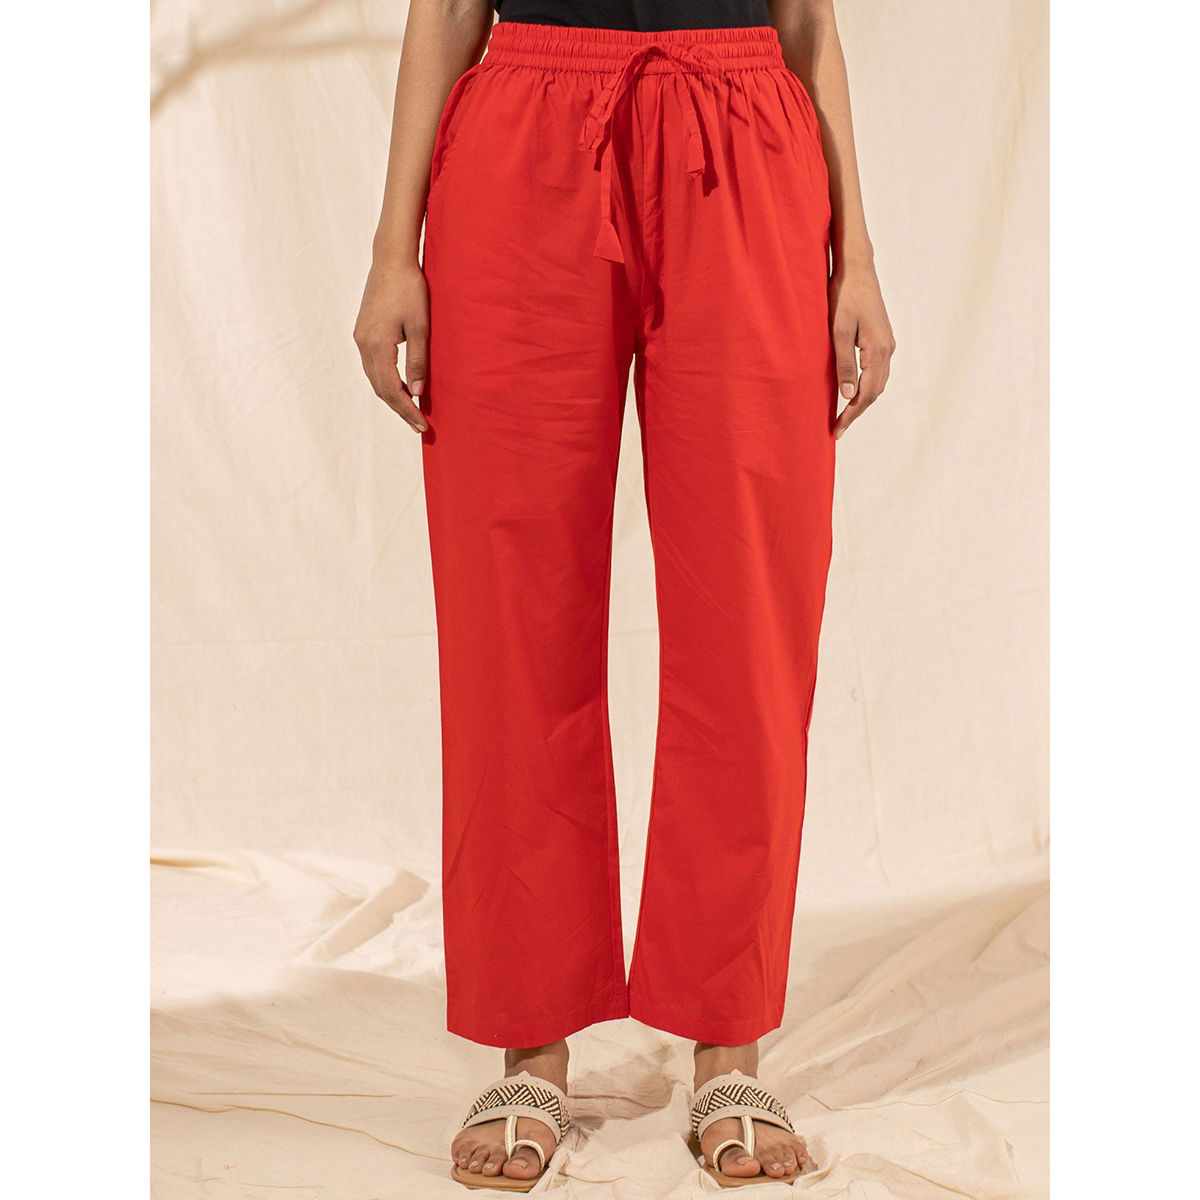 Buy Red Trousers  Pants for Women by TRUSER Online  Ajiocom